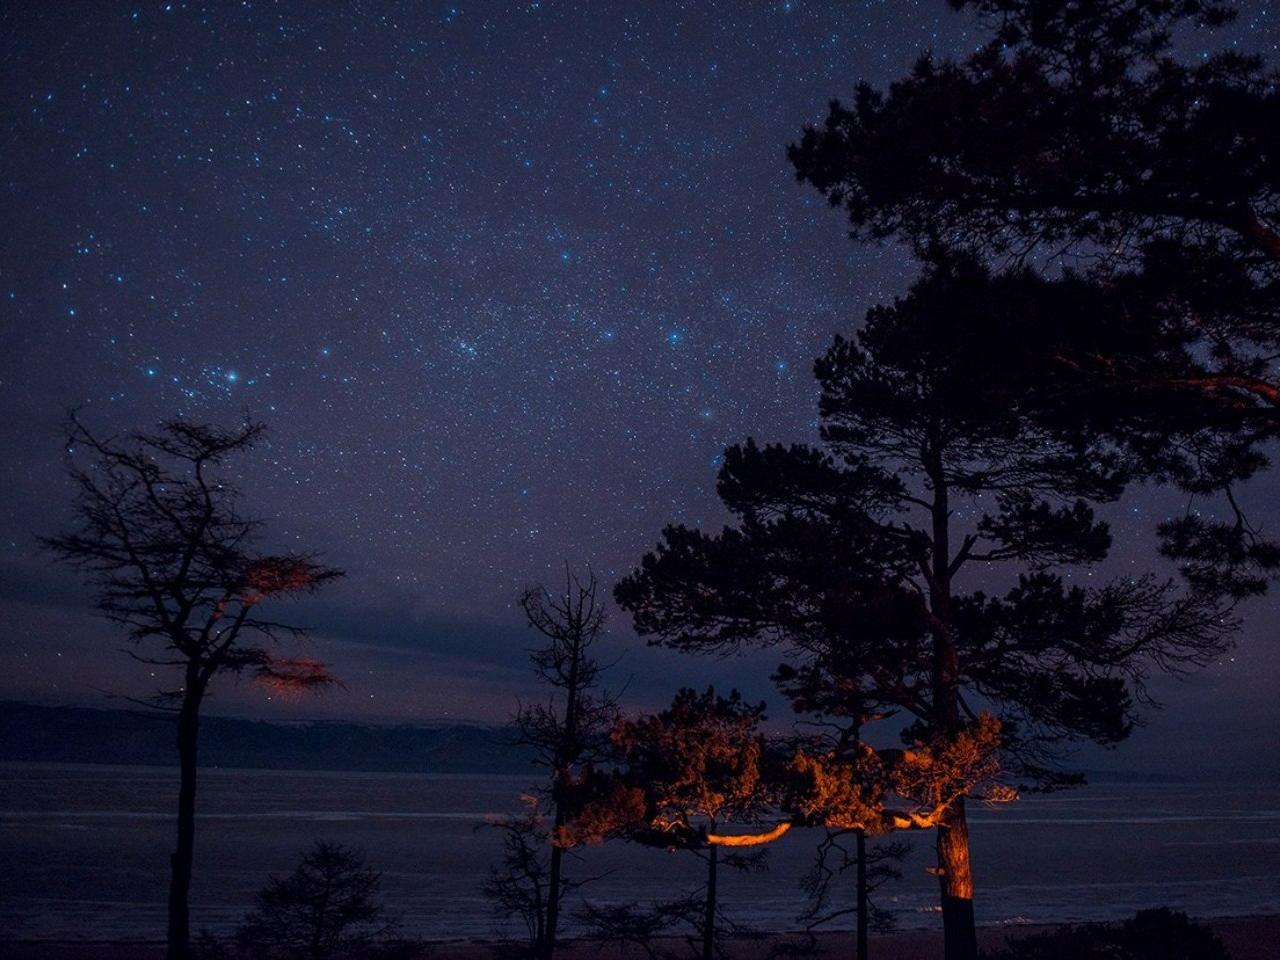 обои Звёздное небо на острове Ольхон,   Байкал фото